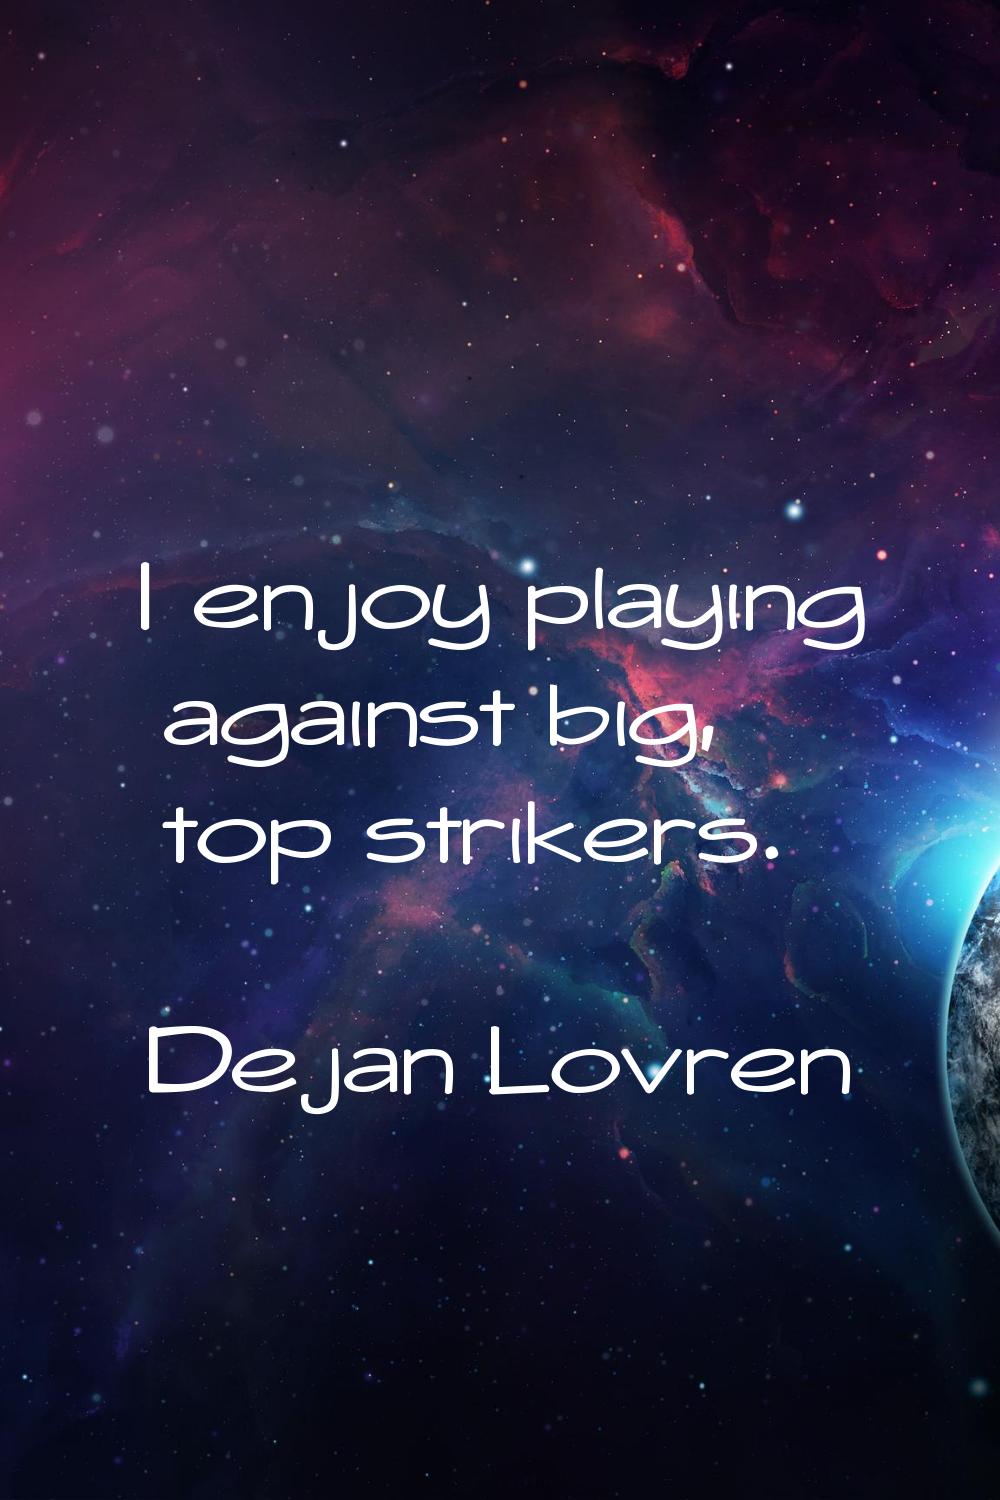 I enjoy playing against big, top strikers.